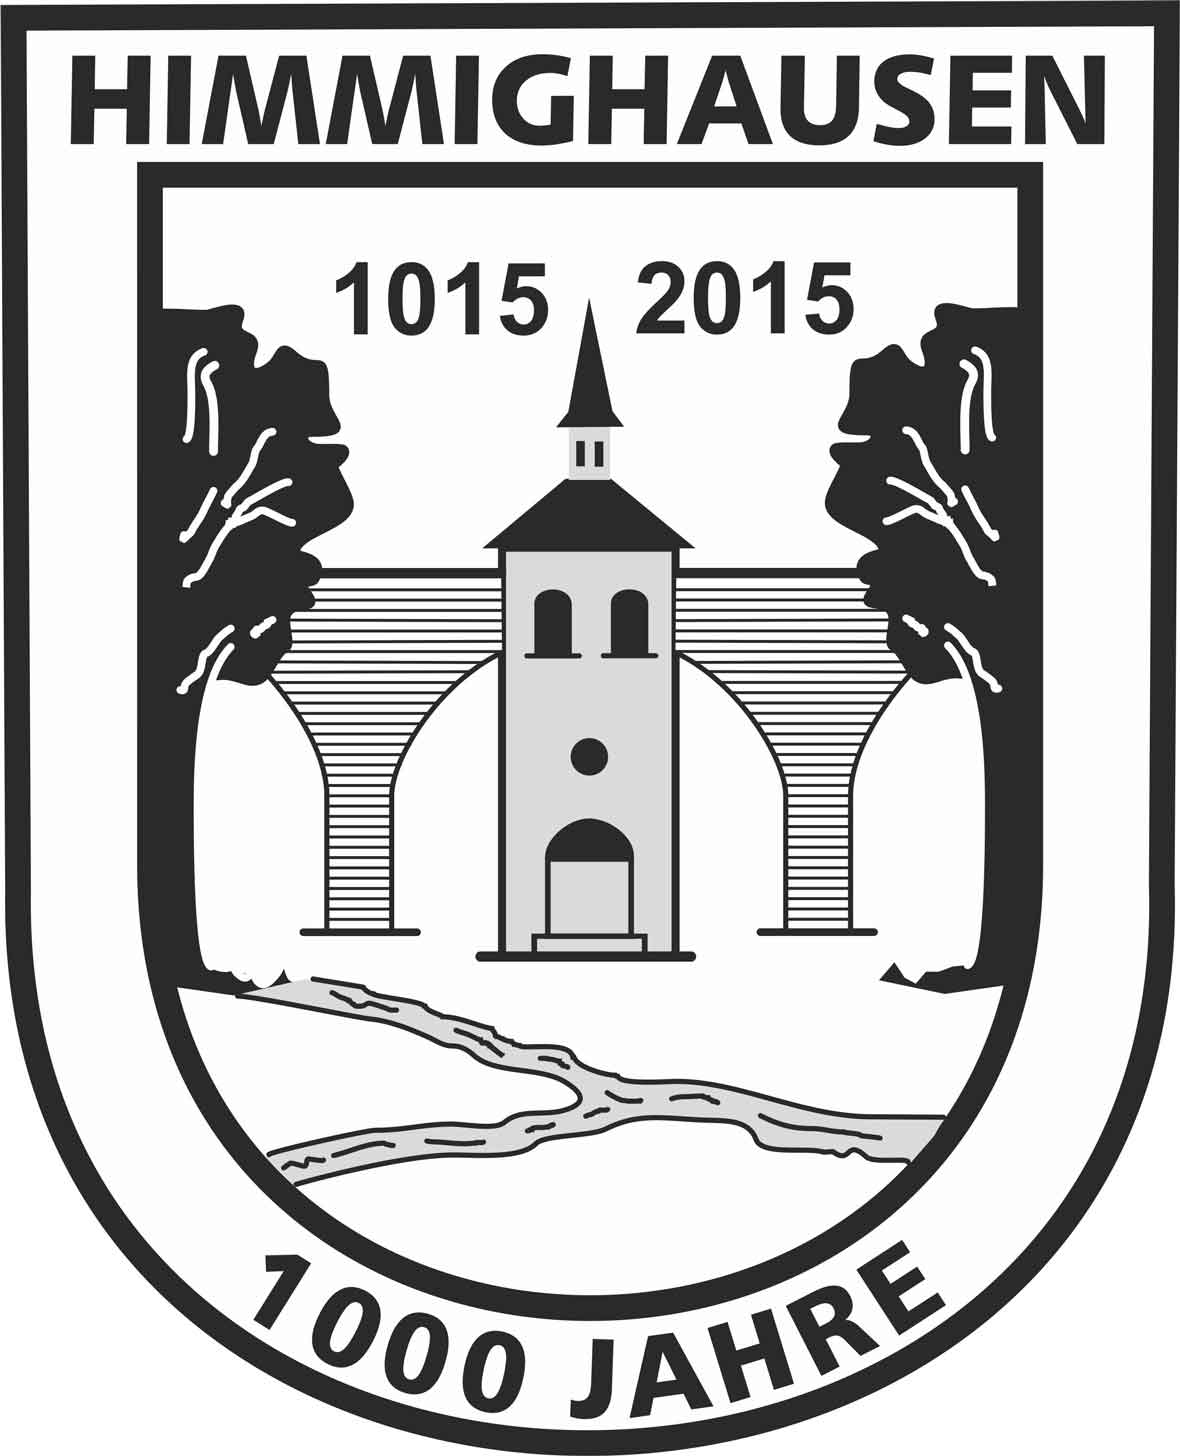 Wappen 1000 Jahre Himmighausen [www.unser-Himmighausen.de]